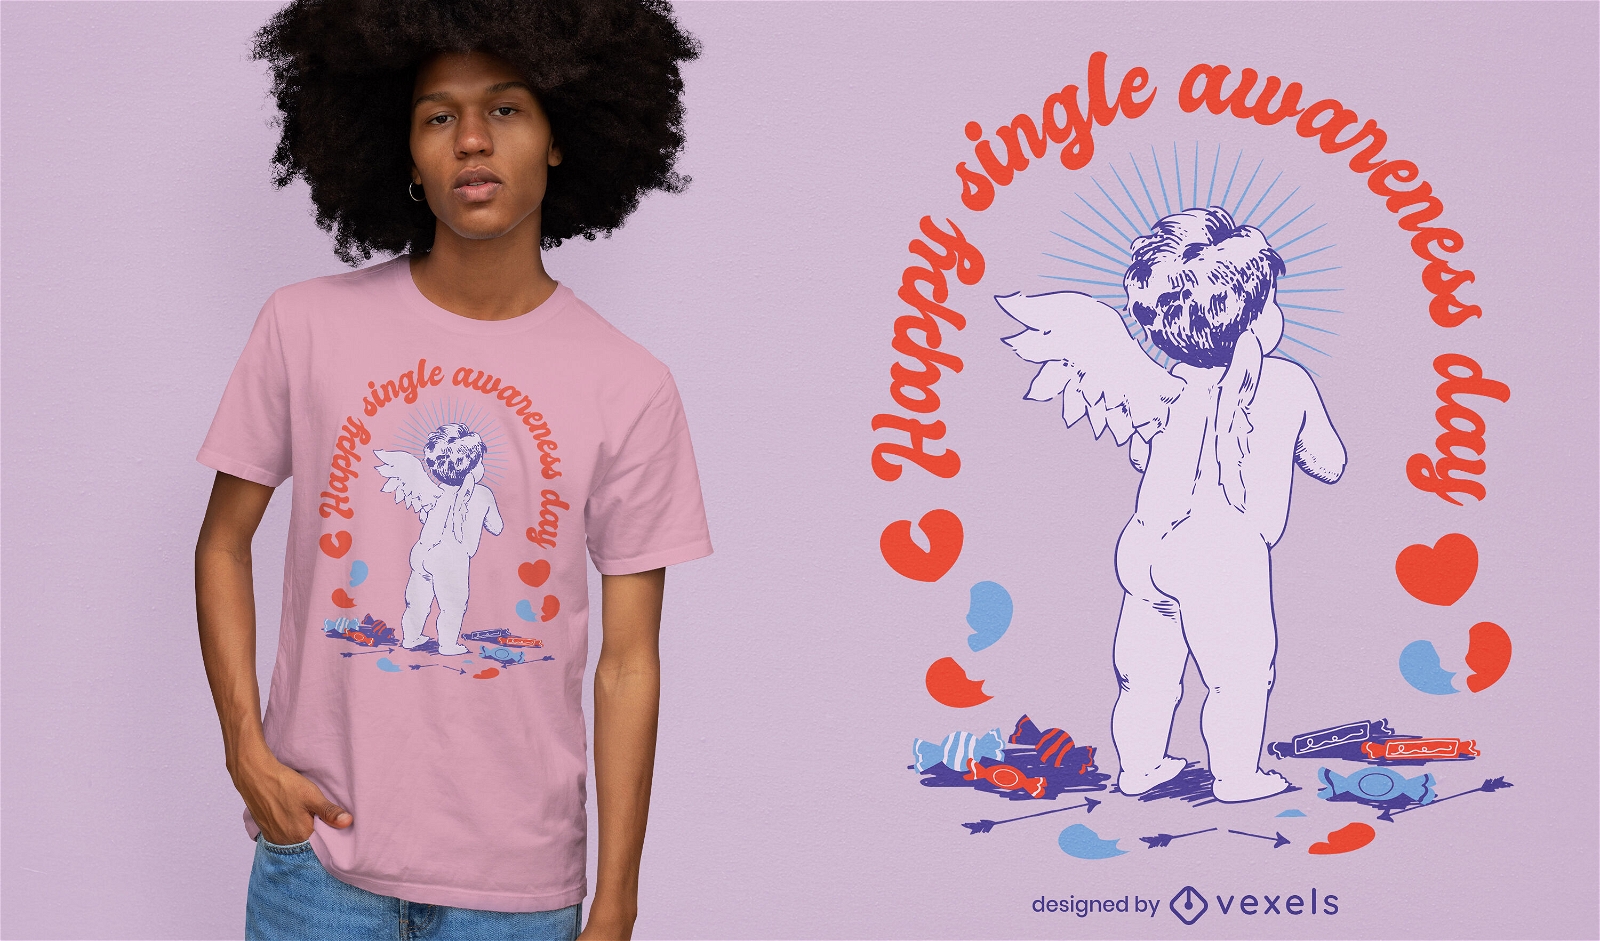 Cool happy single awareness day t-shirt design